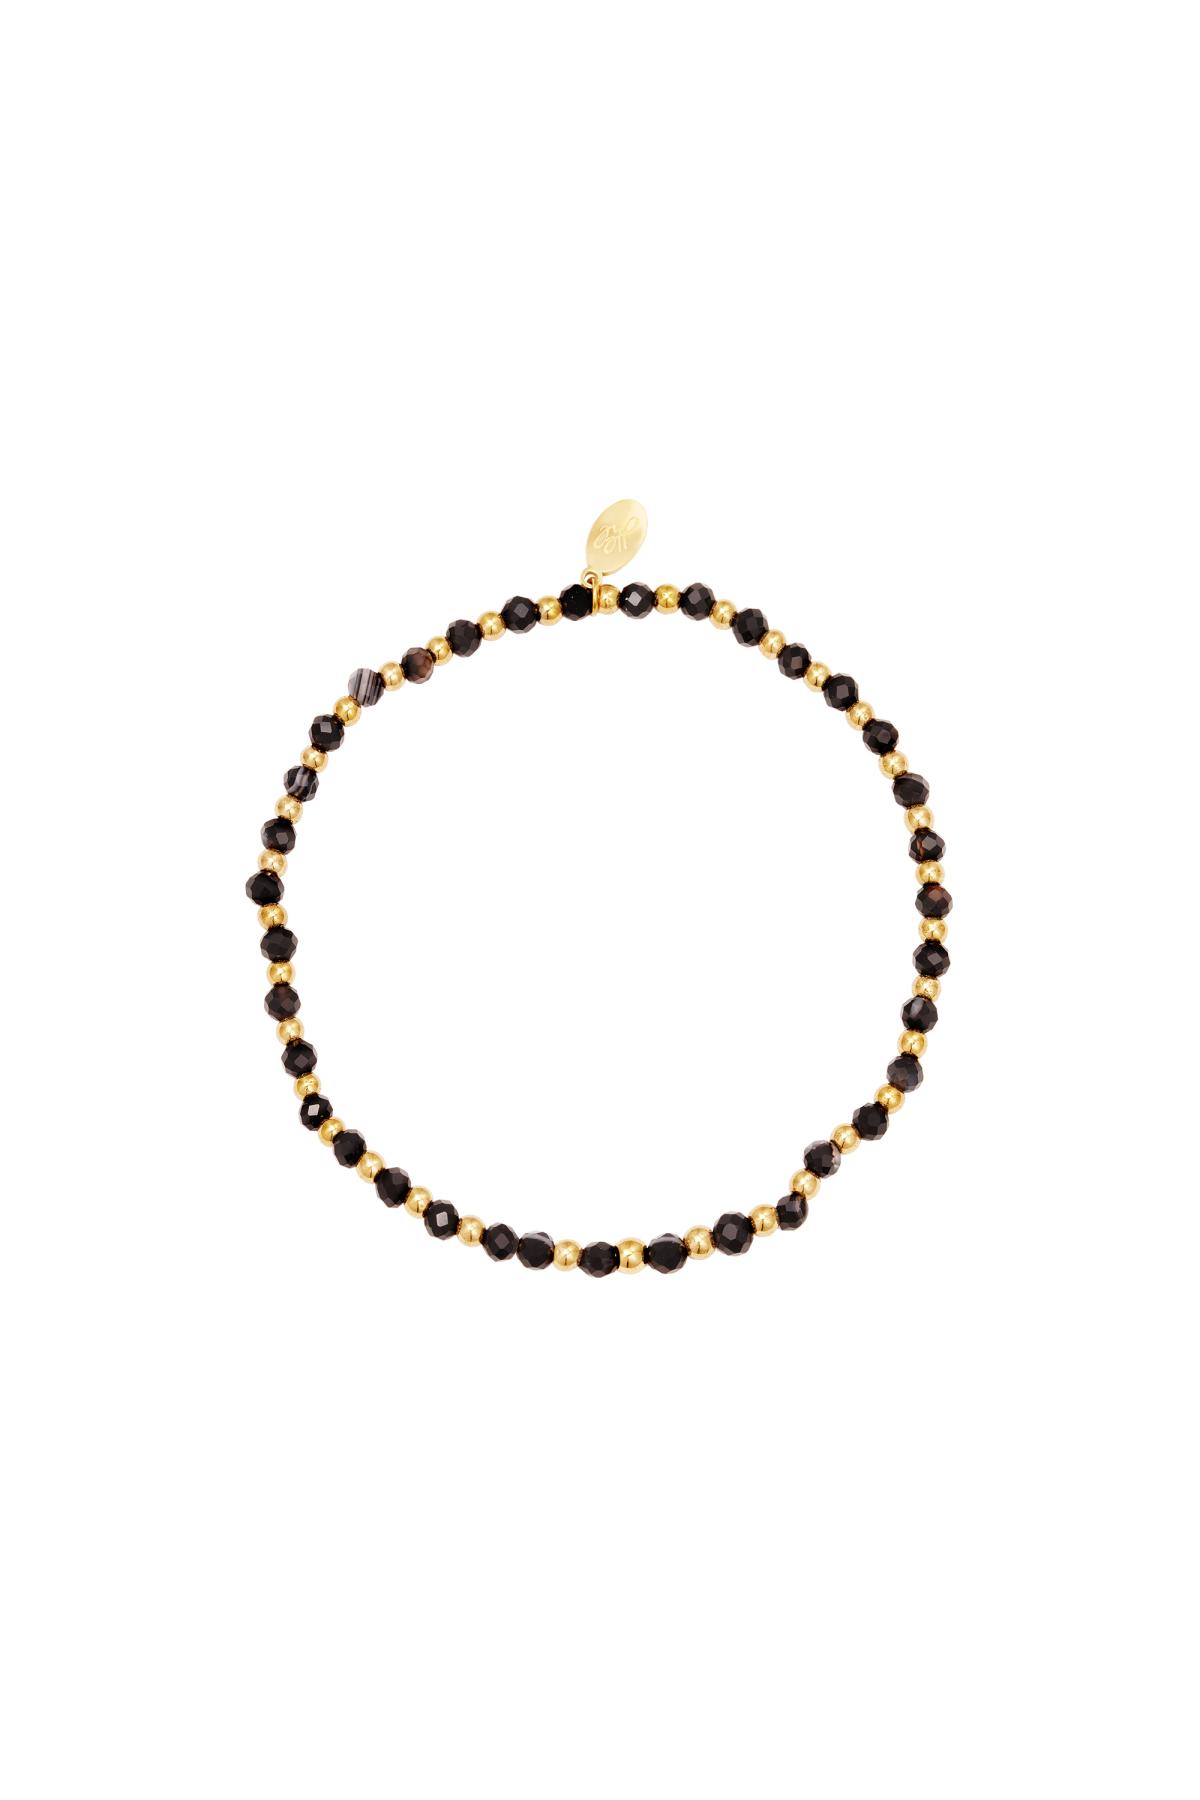 Bracelet colored beads Black agate h5 